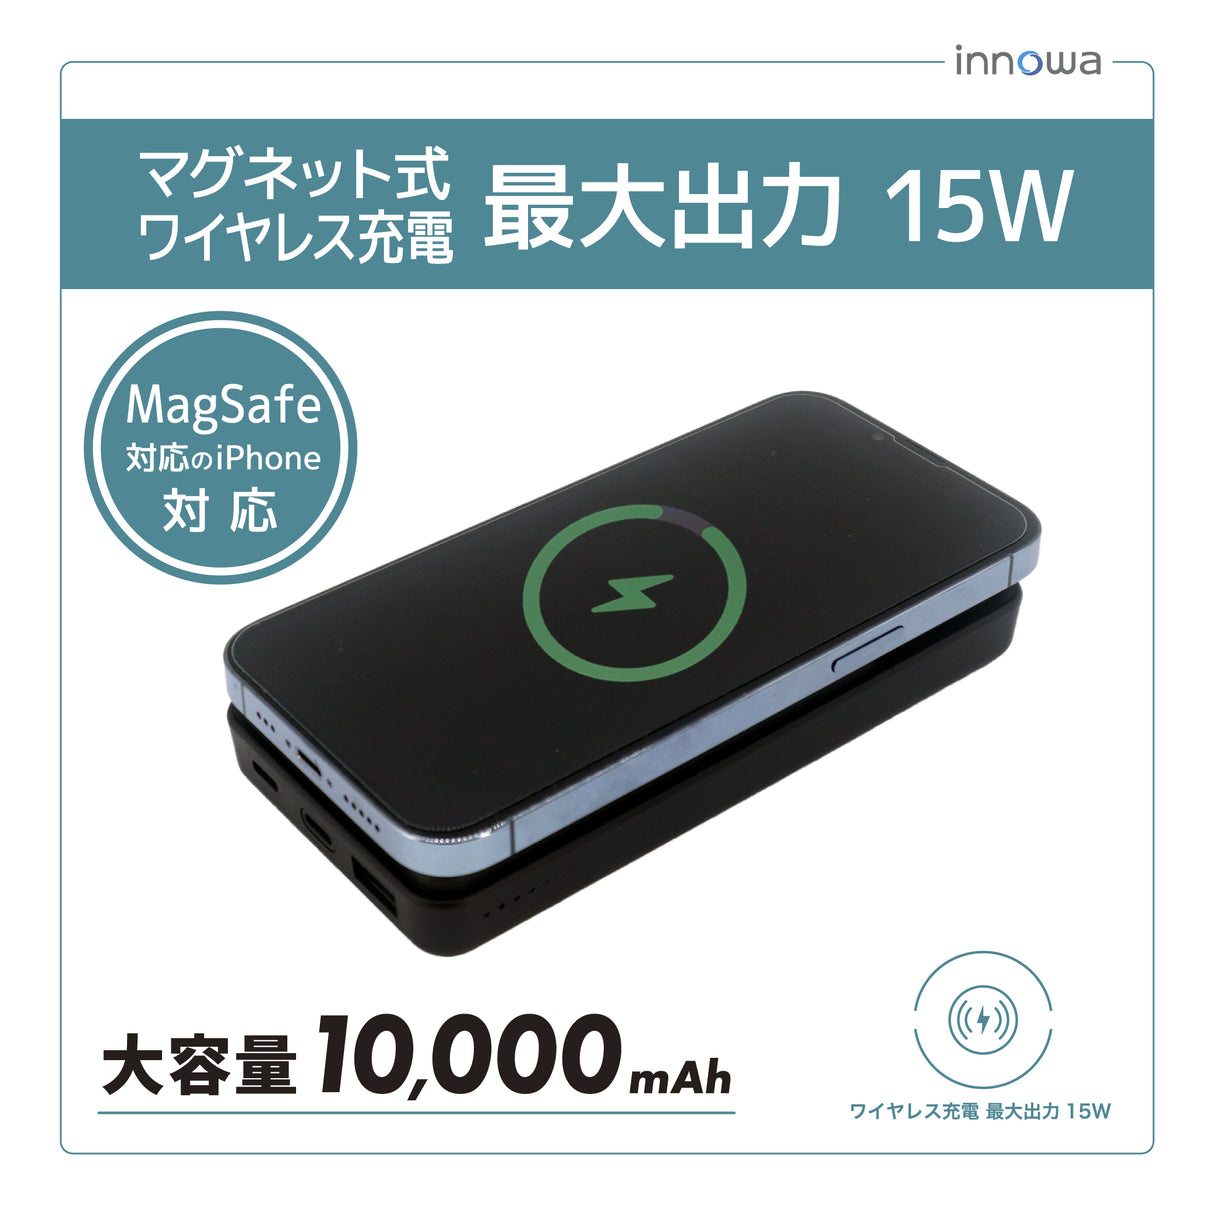 innowa 2in1 マグネット式ワイヤレス充電セット